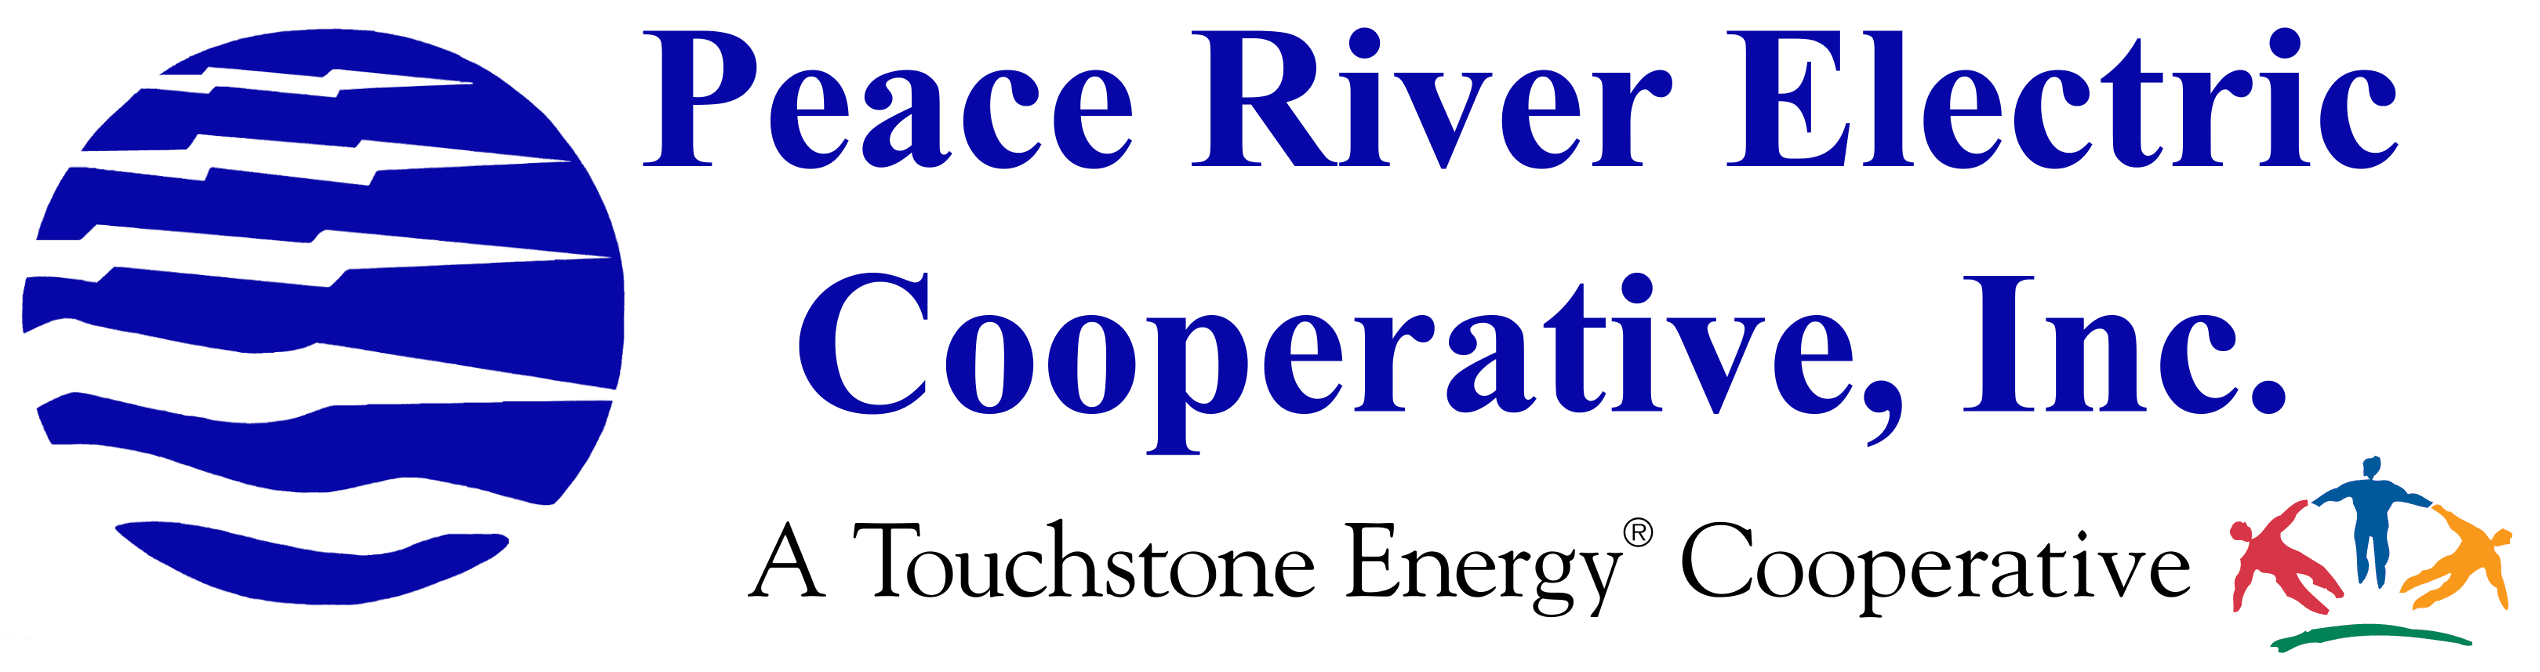 Peace River Electric Cooperative logo